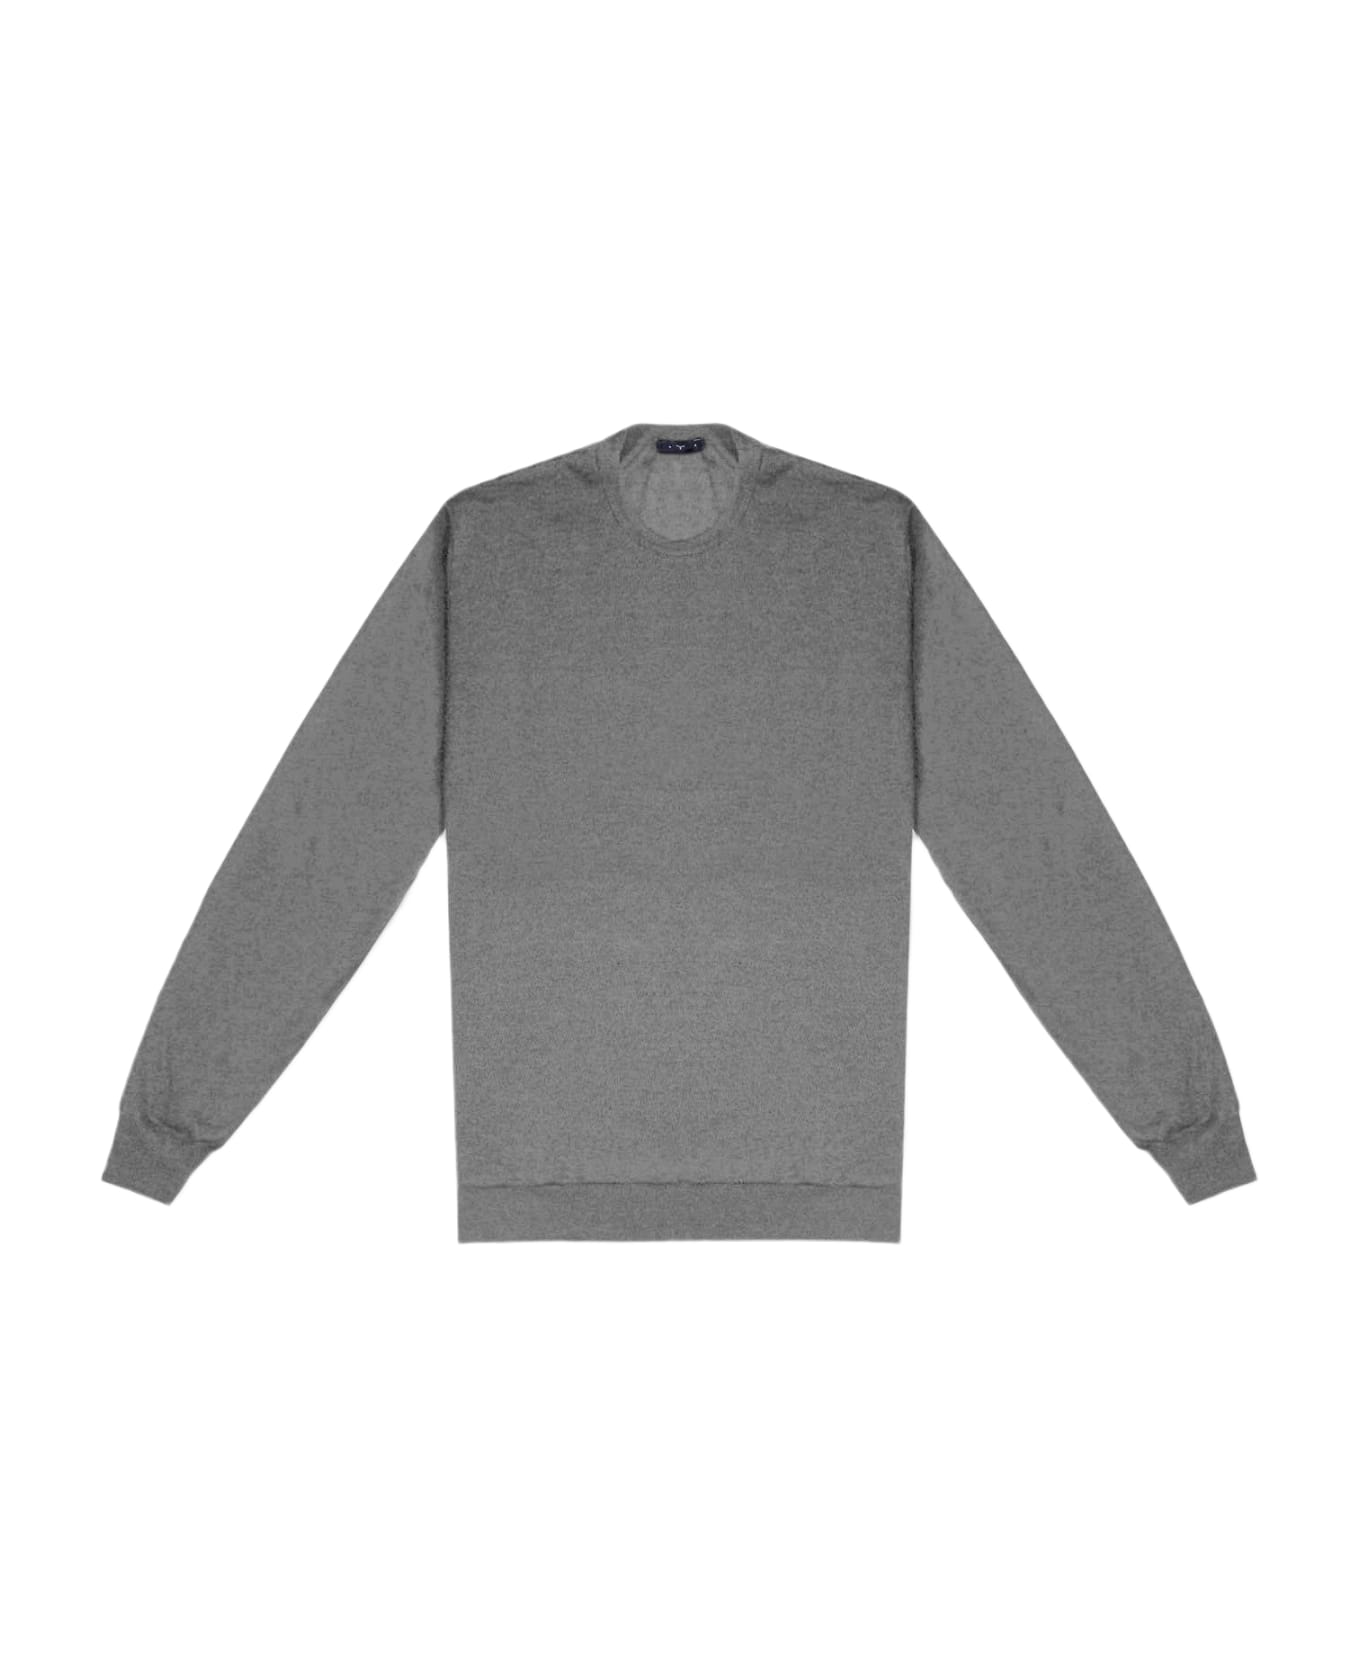 Larusmiani Sweater 'pullman' Sweater - DimGray